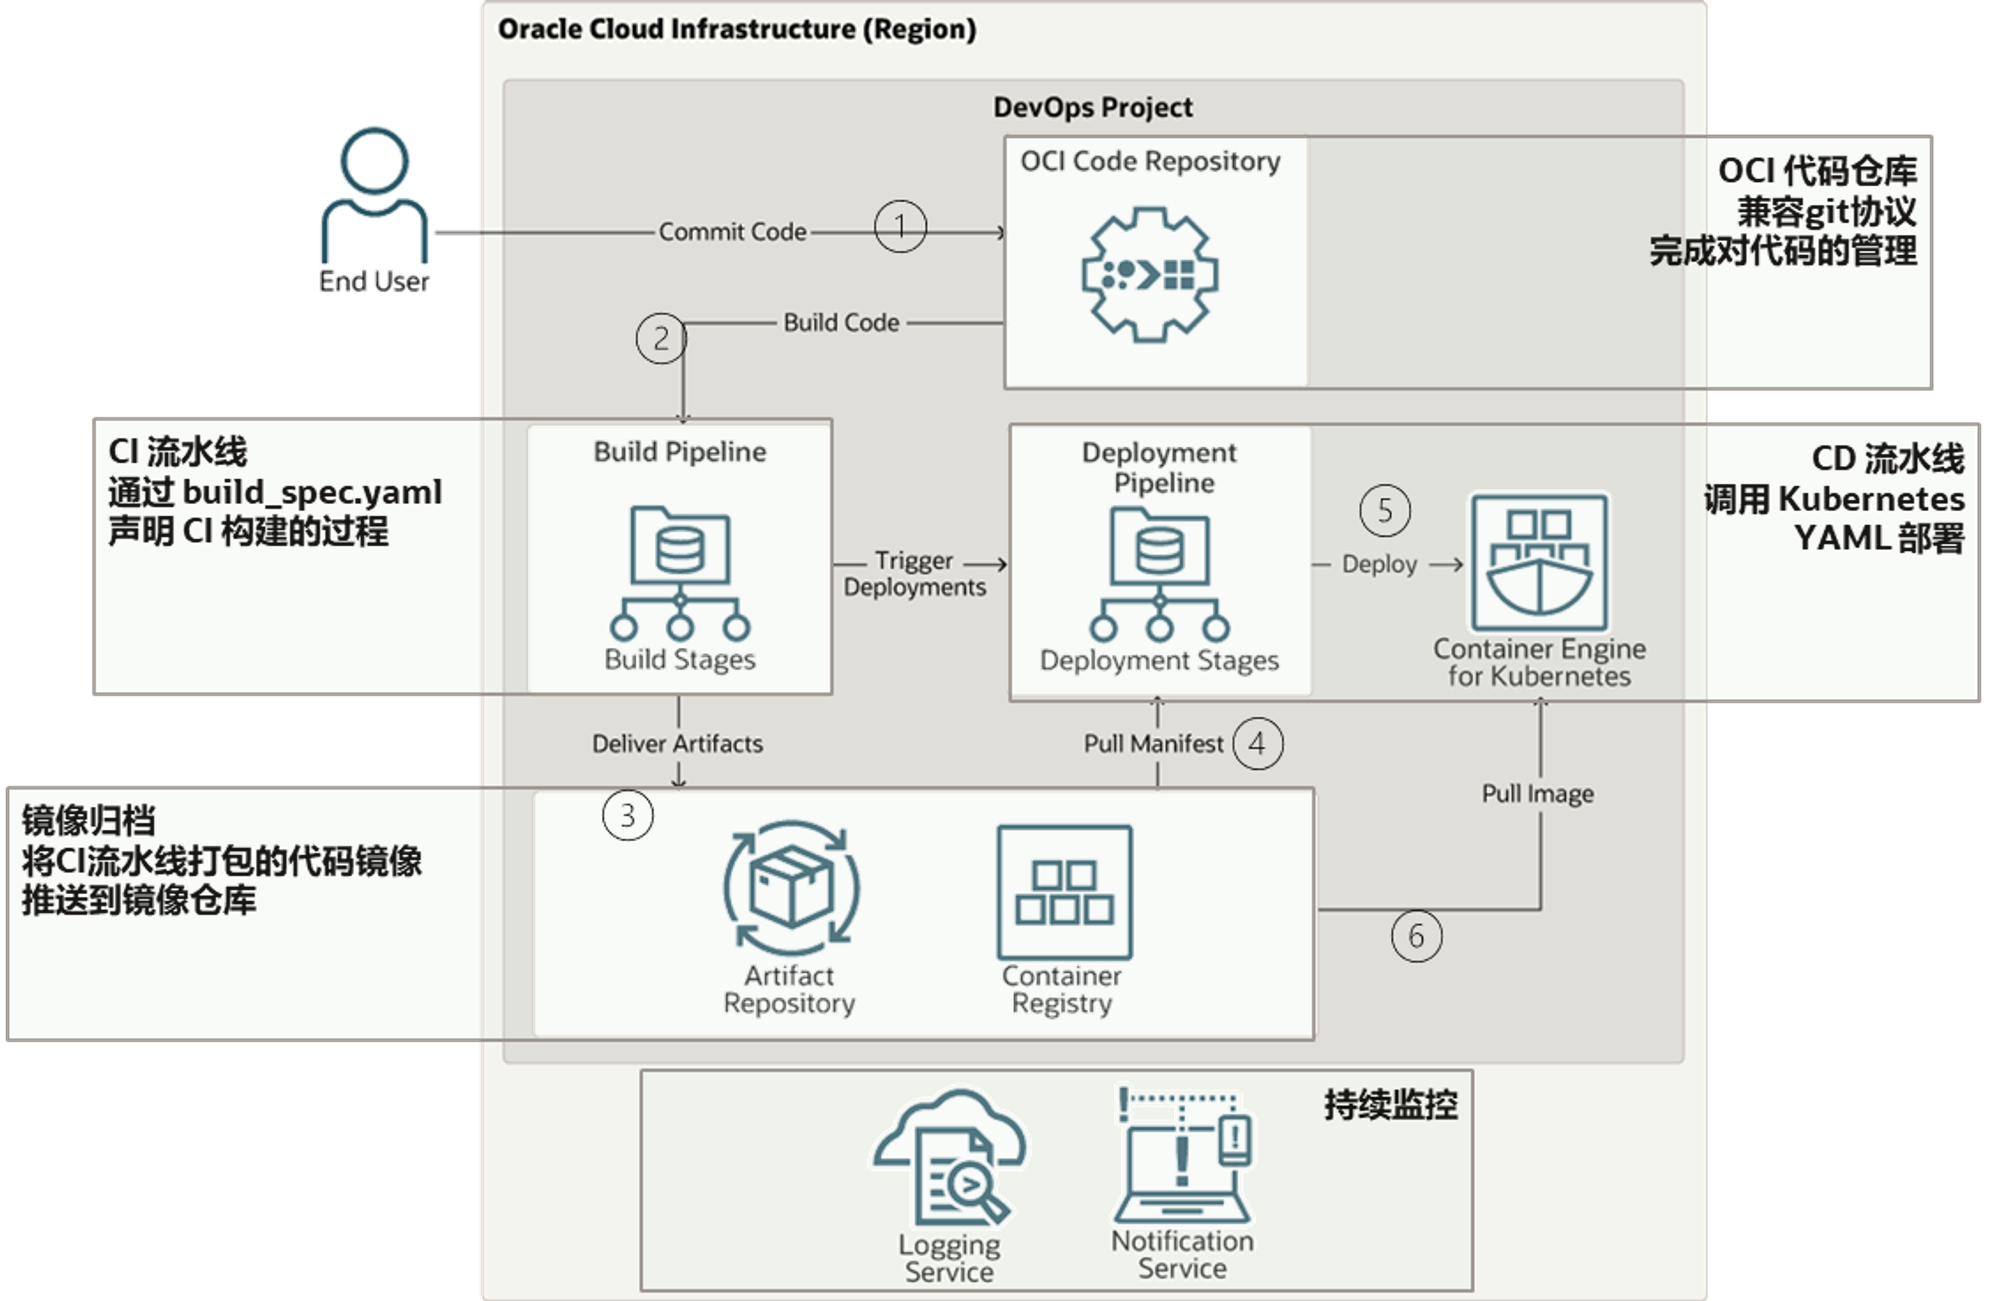 【Oracle云】OCI DevOps Services 构建自动化流水线 (1) - 基础架构流程 && OCI 代码仓库使用